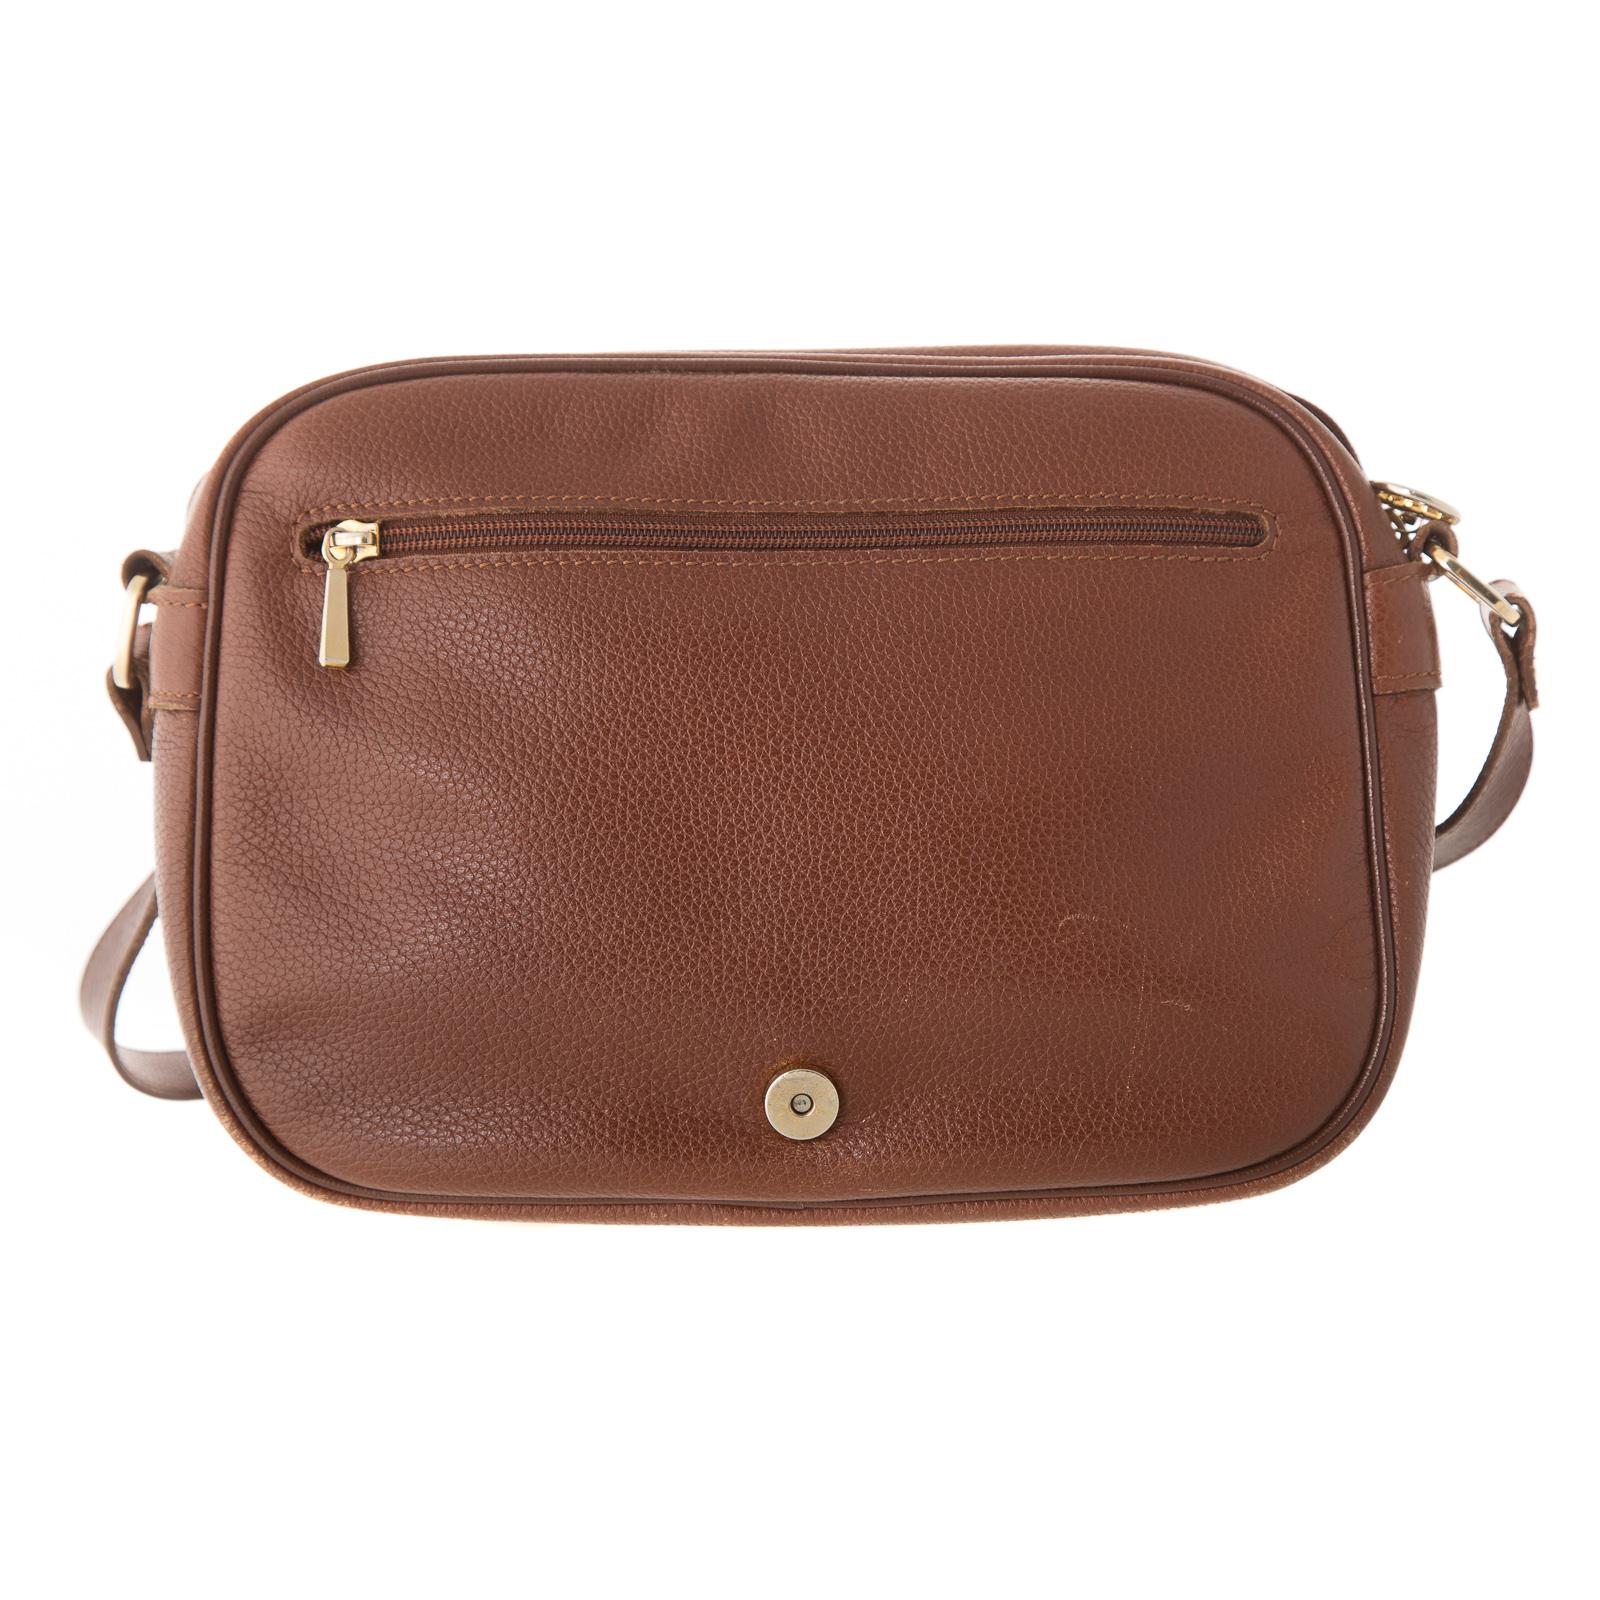 Sold at Auction: Vintage Longchamp Brown Leather Purse